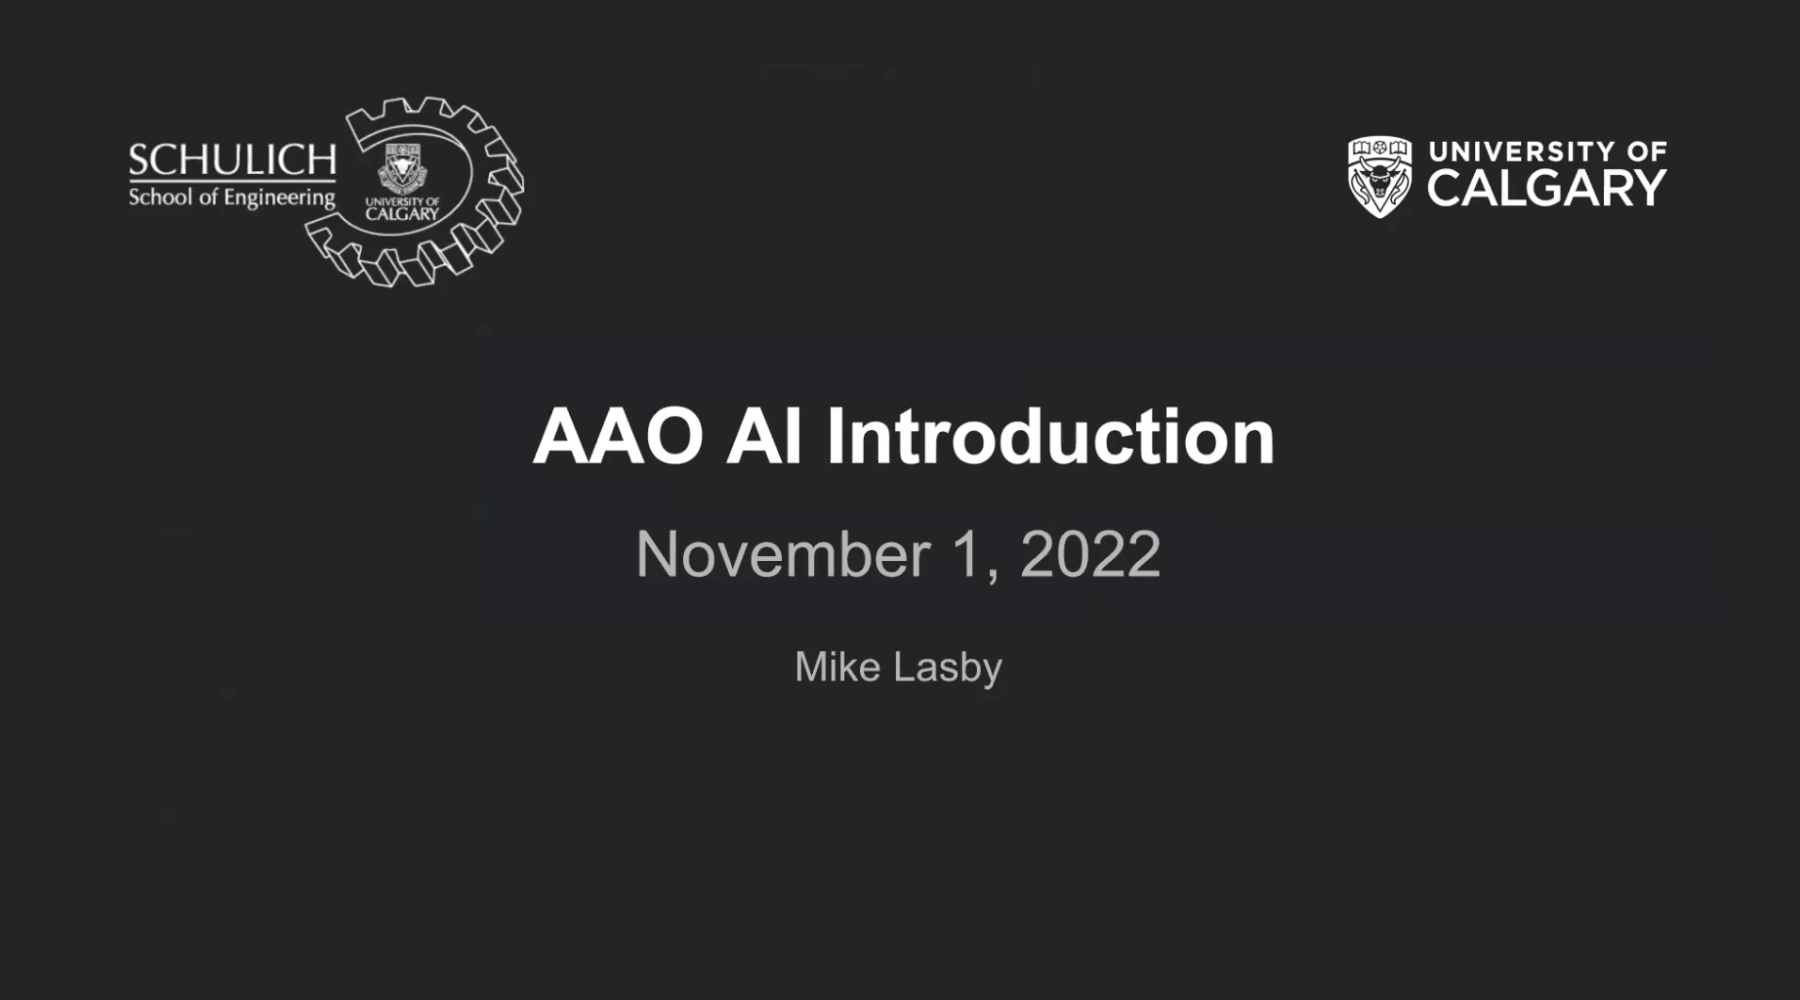 AAO AI Introduction Video